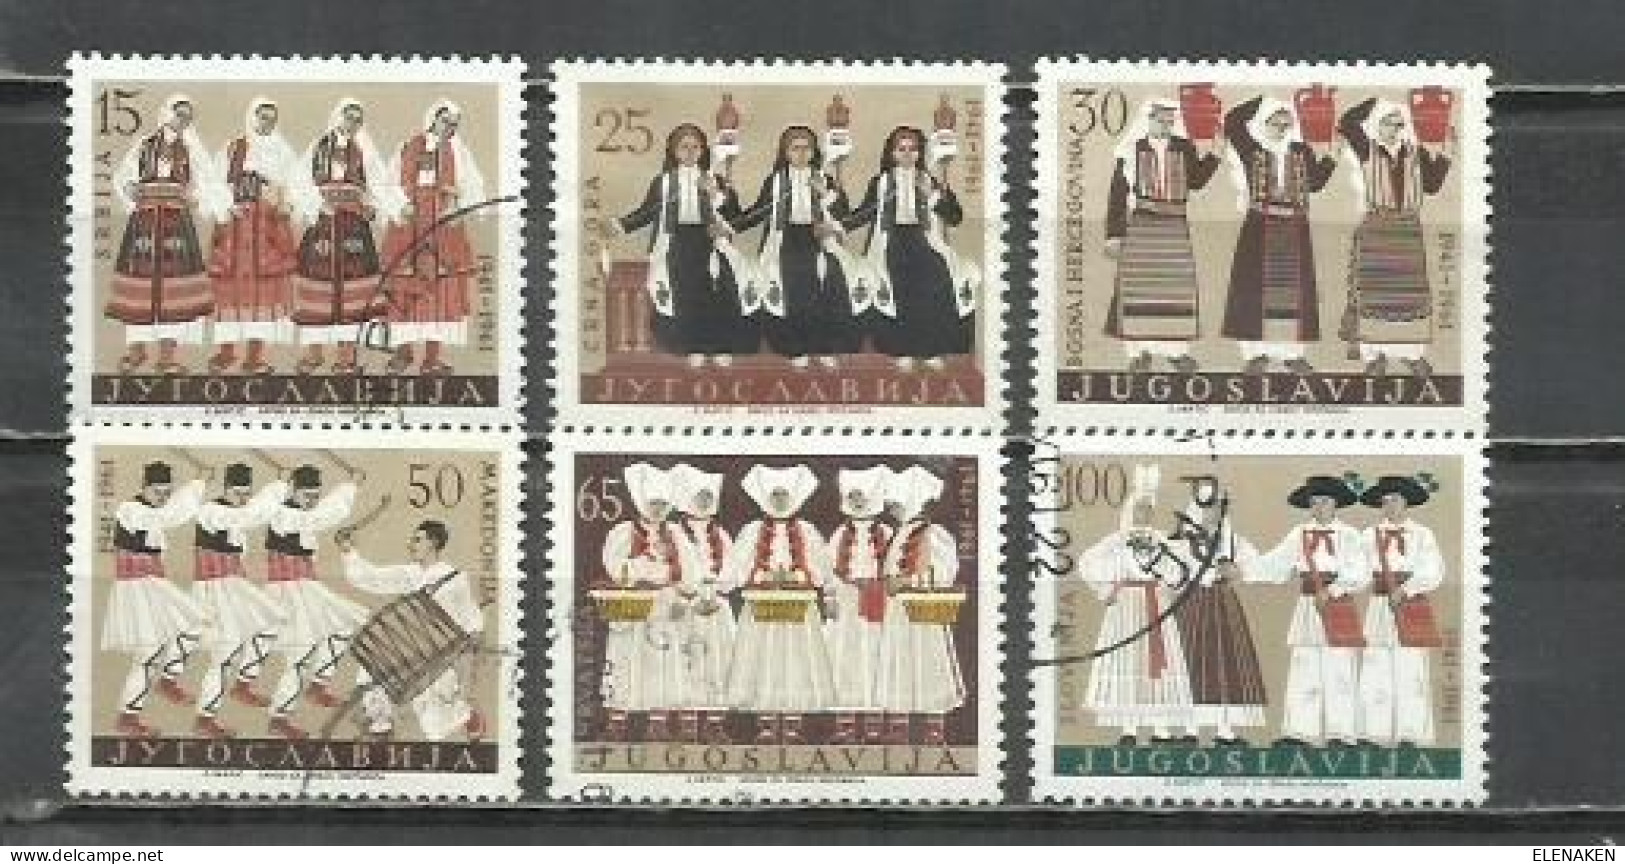 7565D-YUGOSLAVIA JUGOSLAVIA  SERIE COMPLETA 1961 FOLKLORE Nº 879/884 COSTUMBRES. - Used Stamps